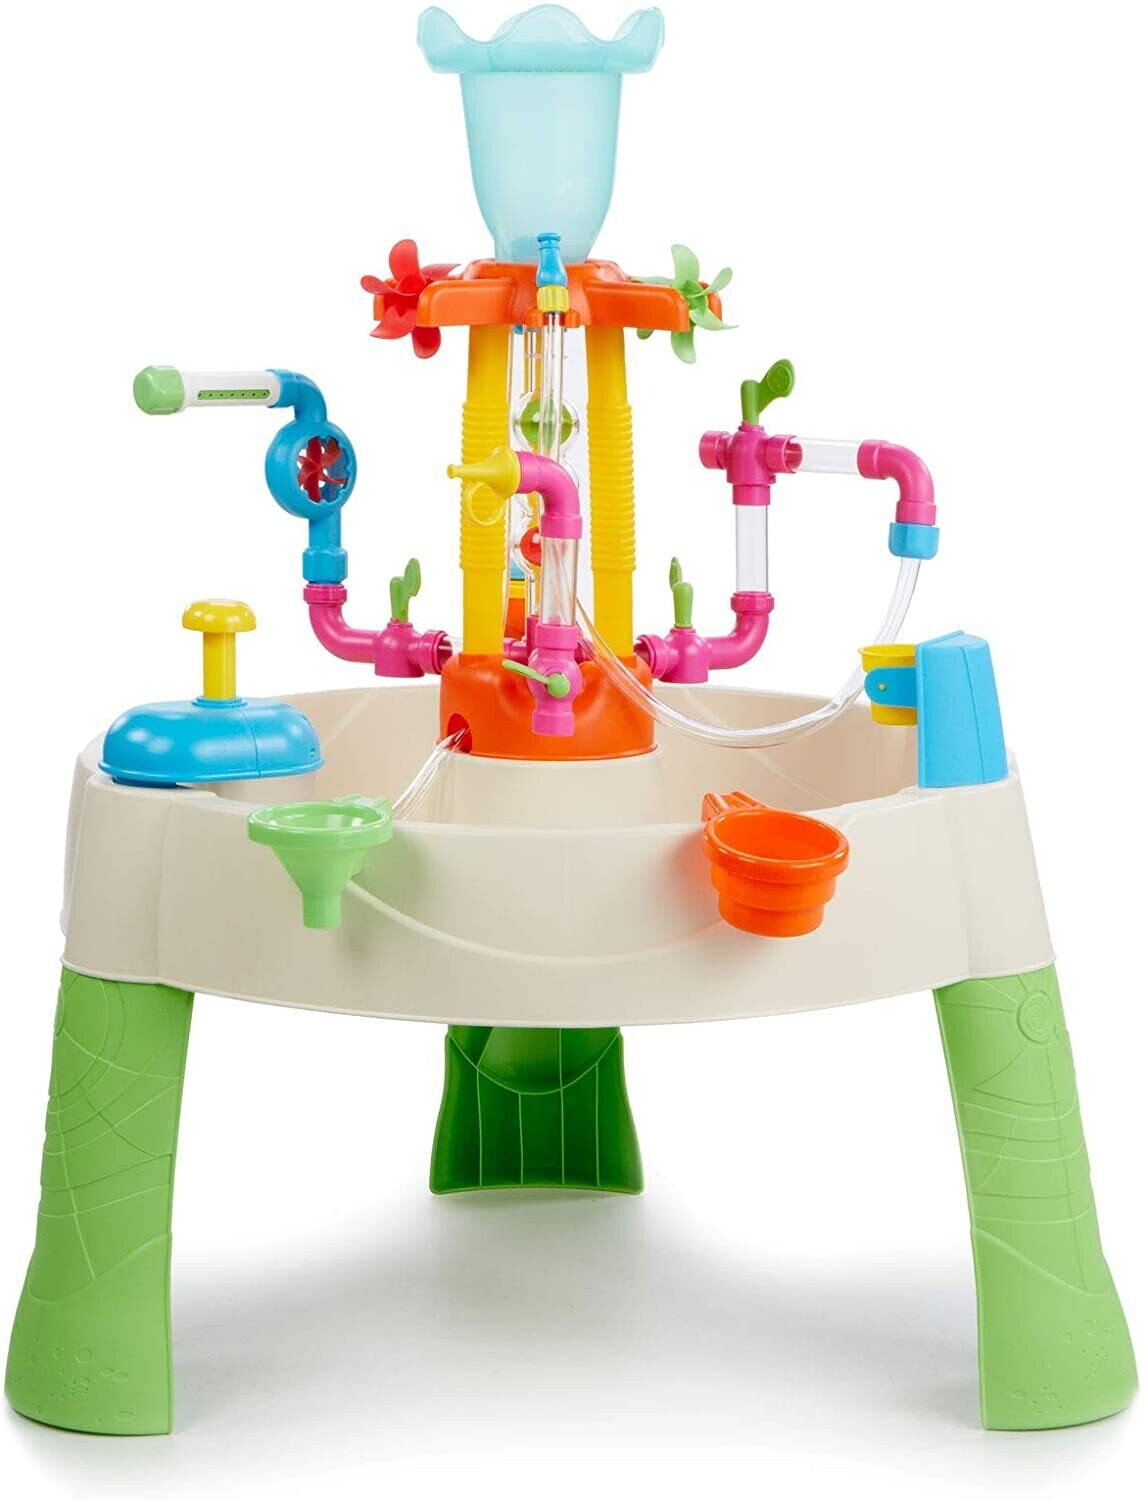 Fountain Factory Water Table - Outdoor Garden Toy